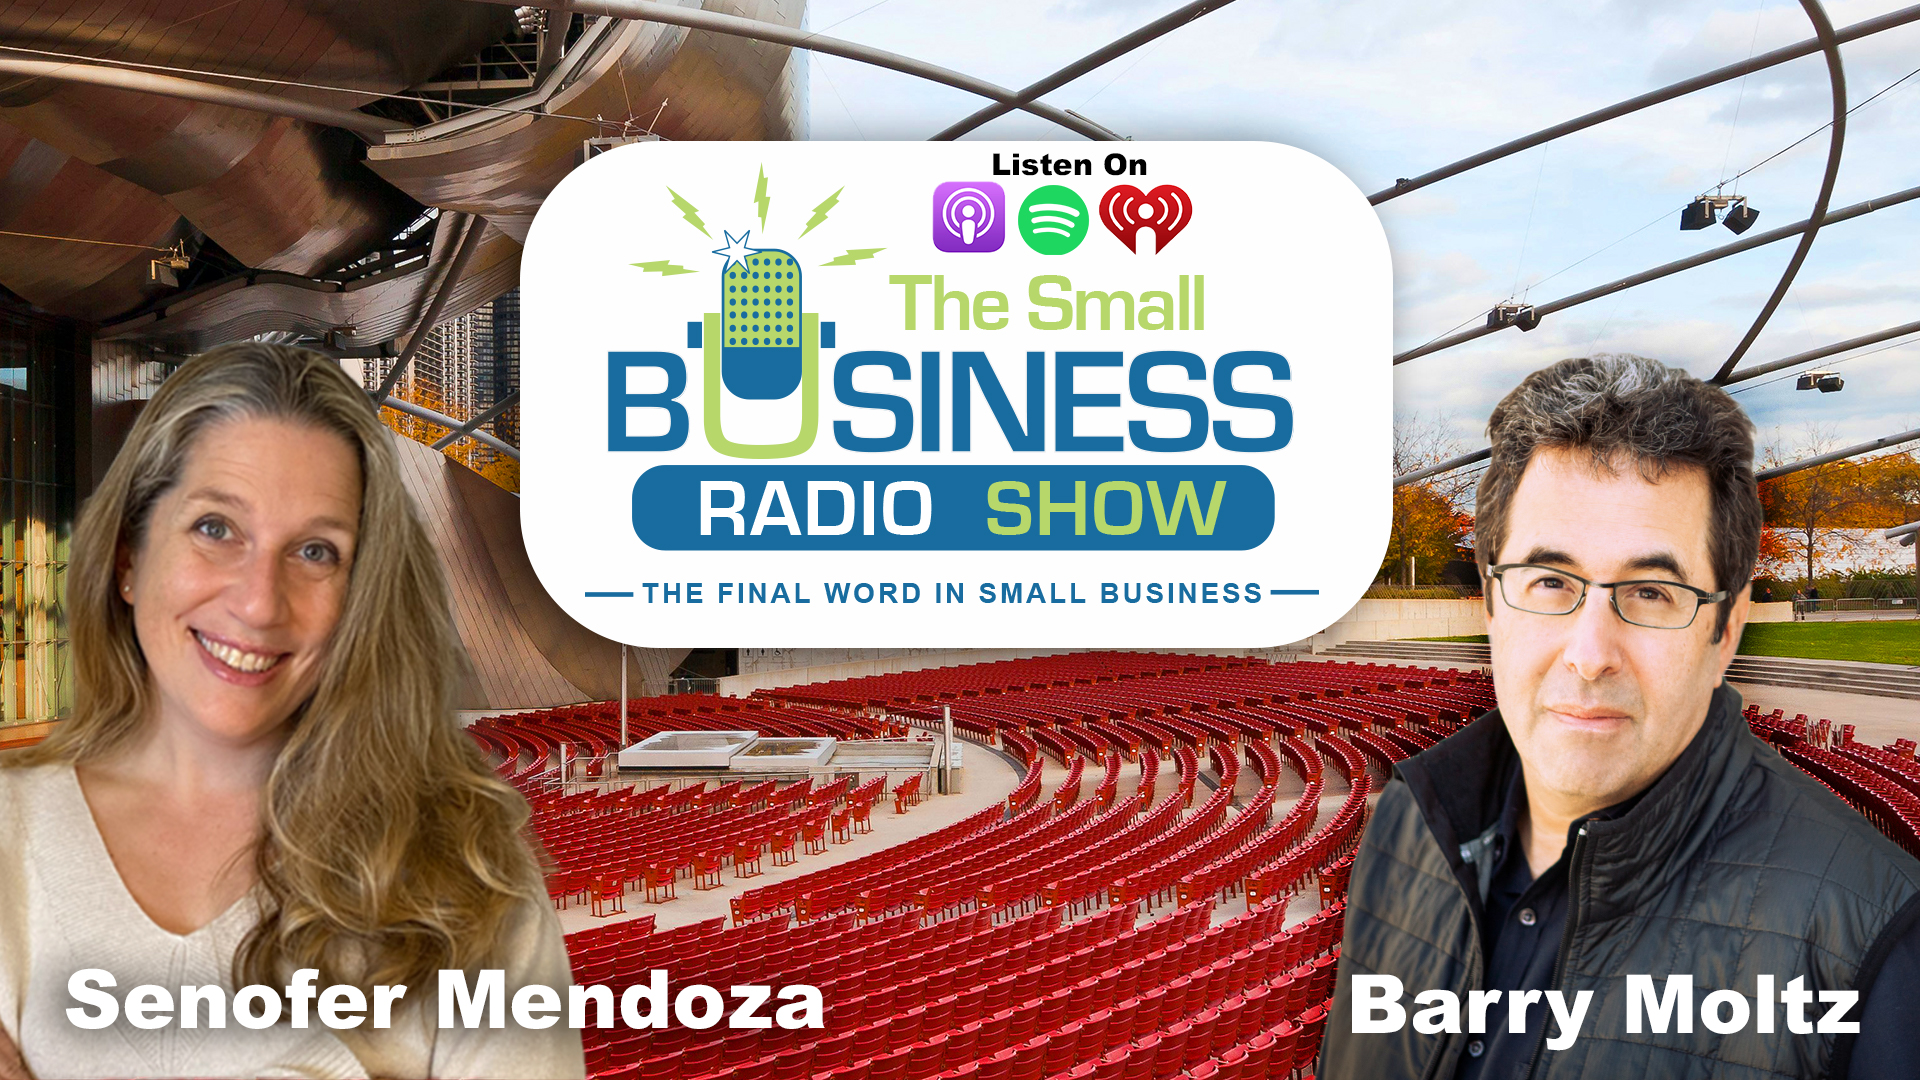 Senofer Mendoza on The Small Business Radio Show